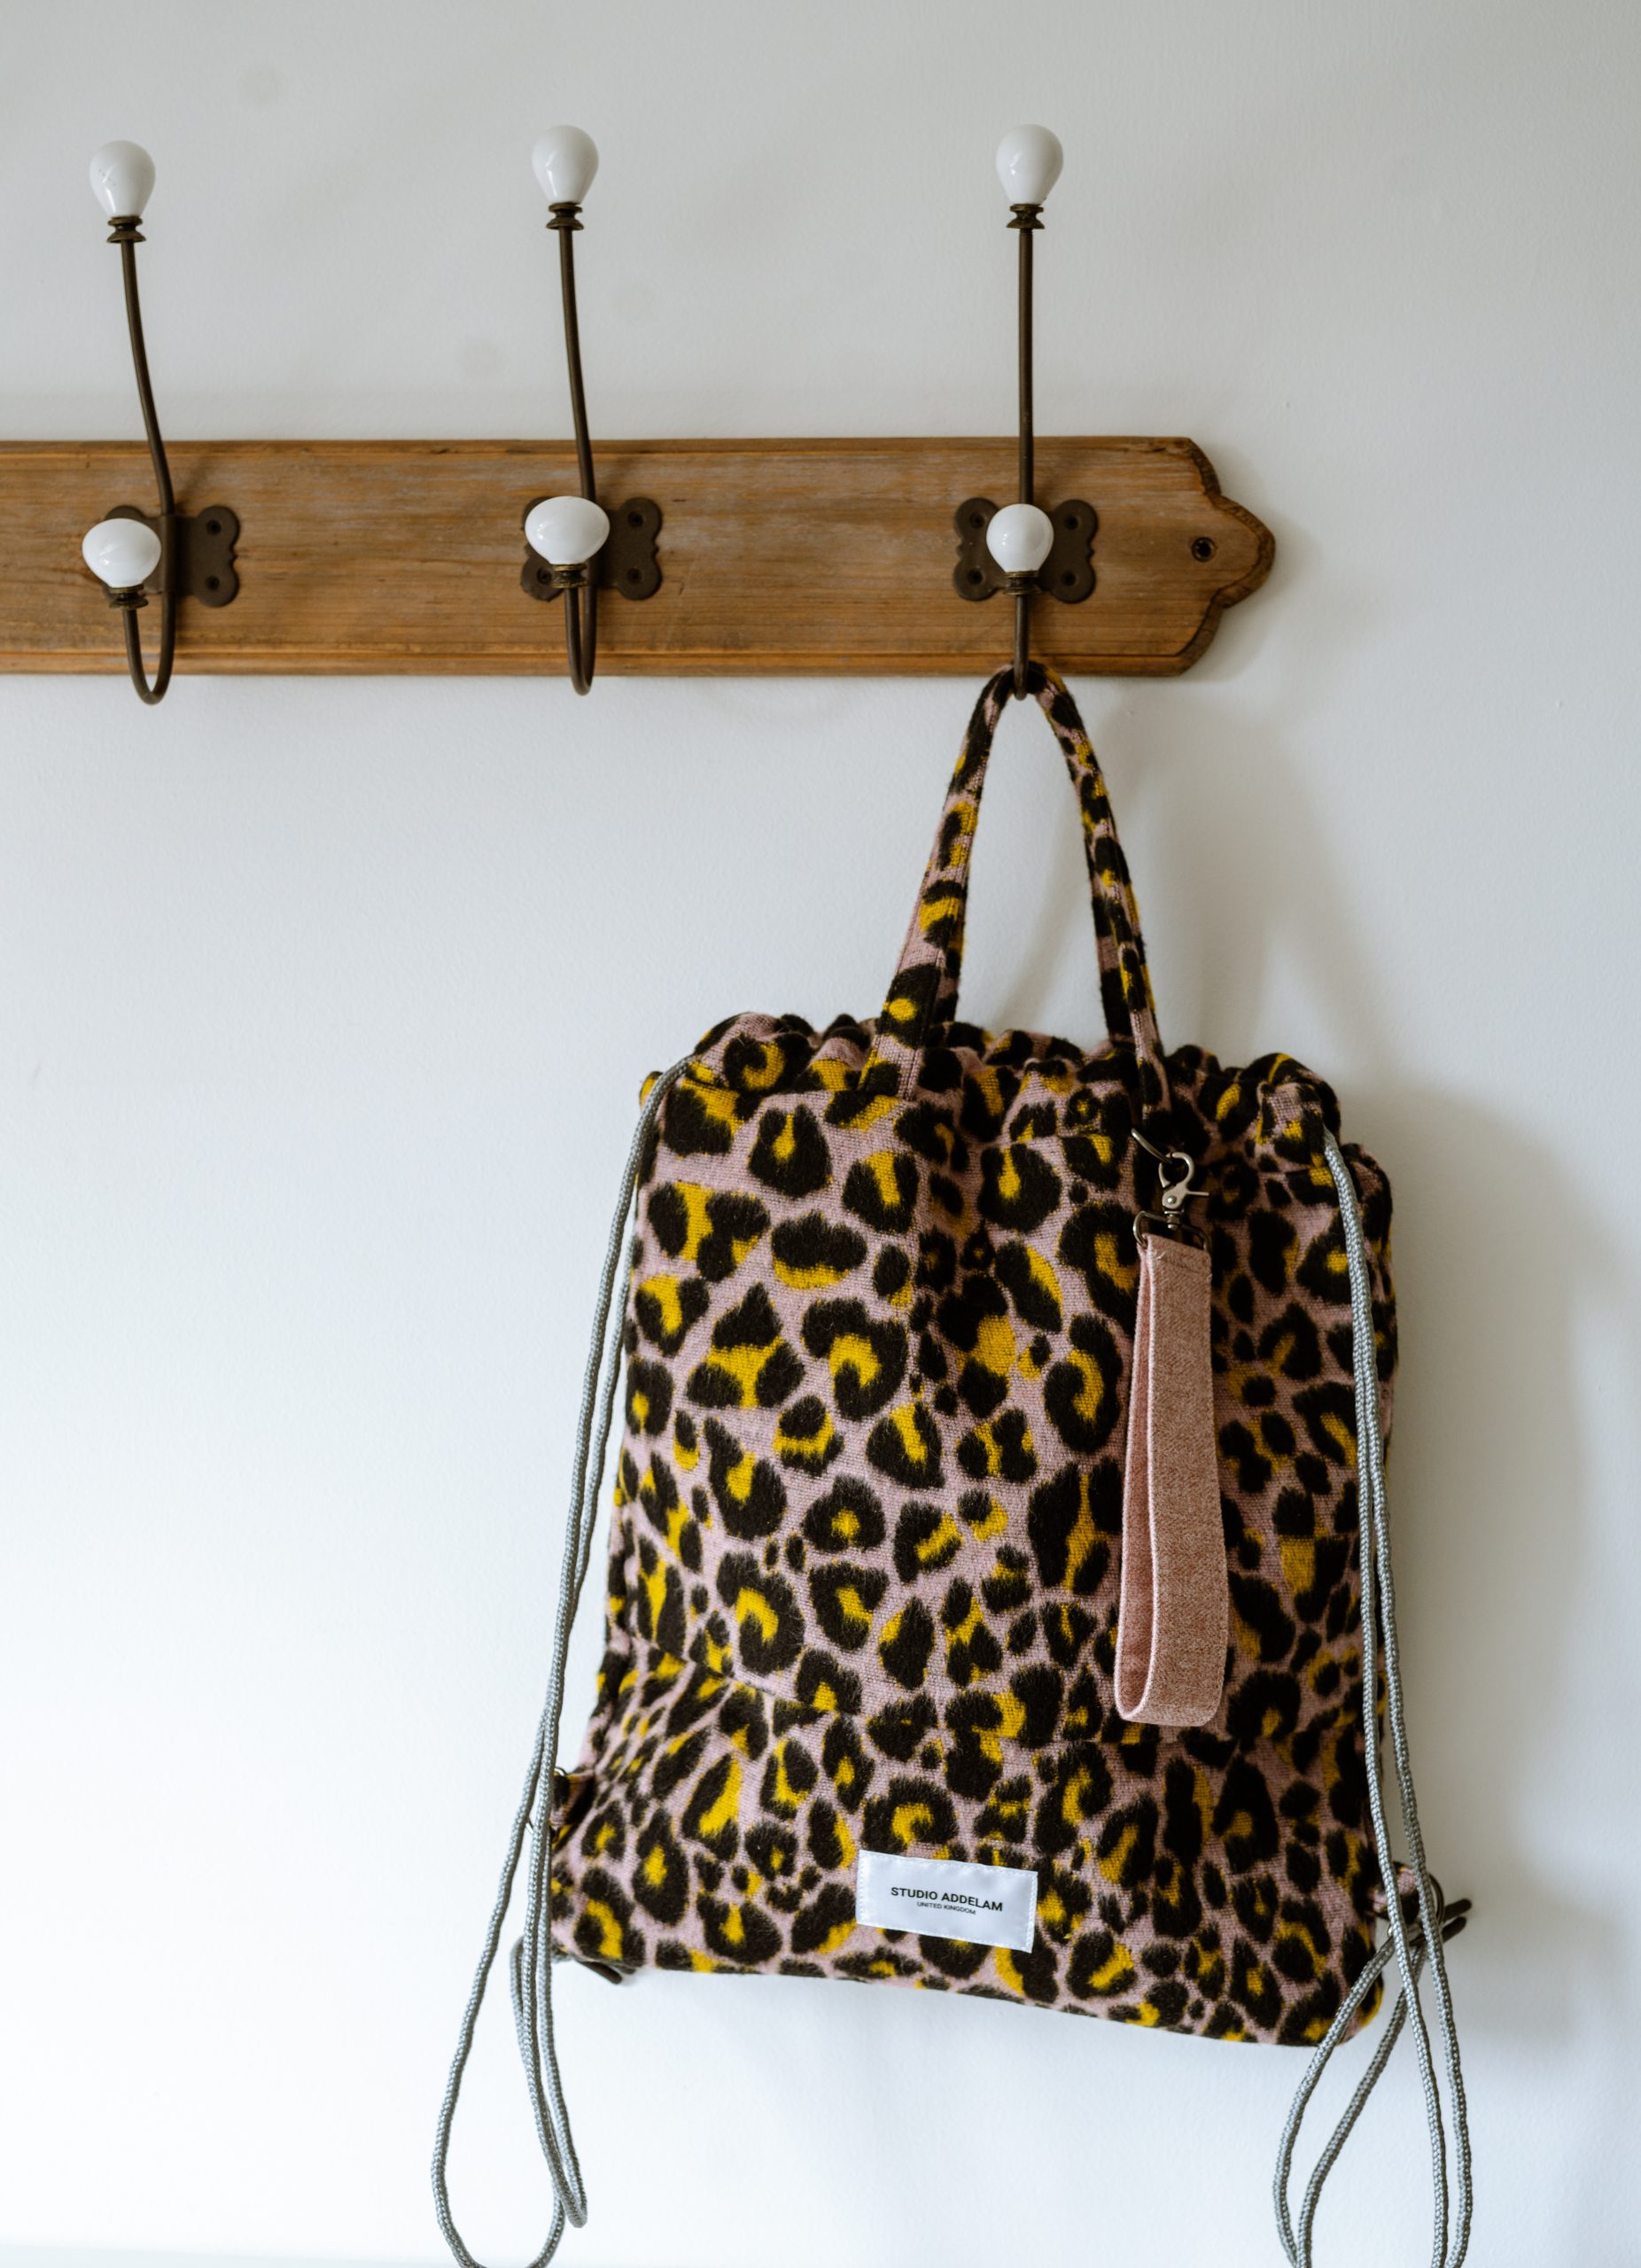 Animal print bag hanging from a coat peg